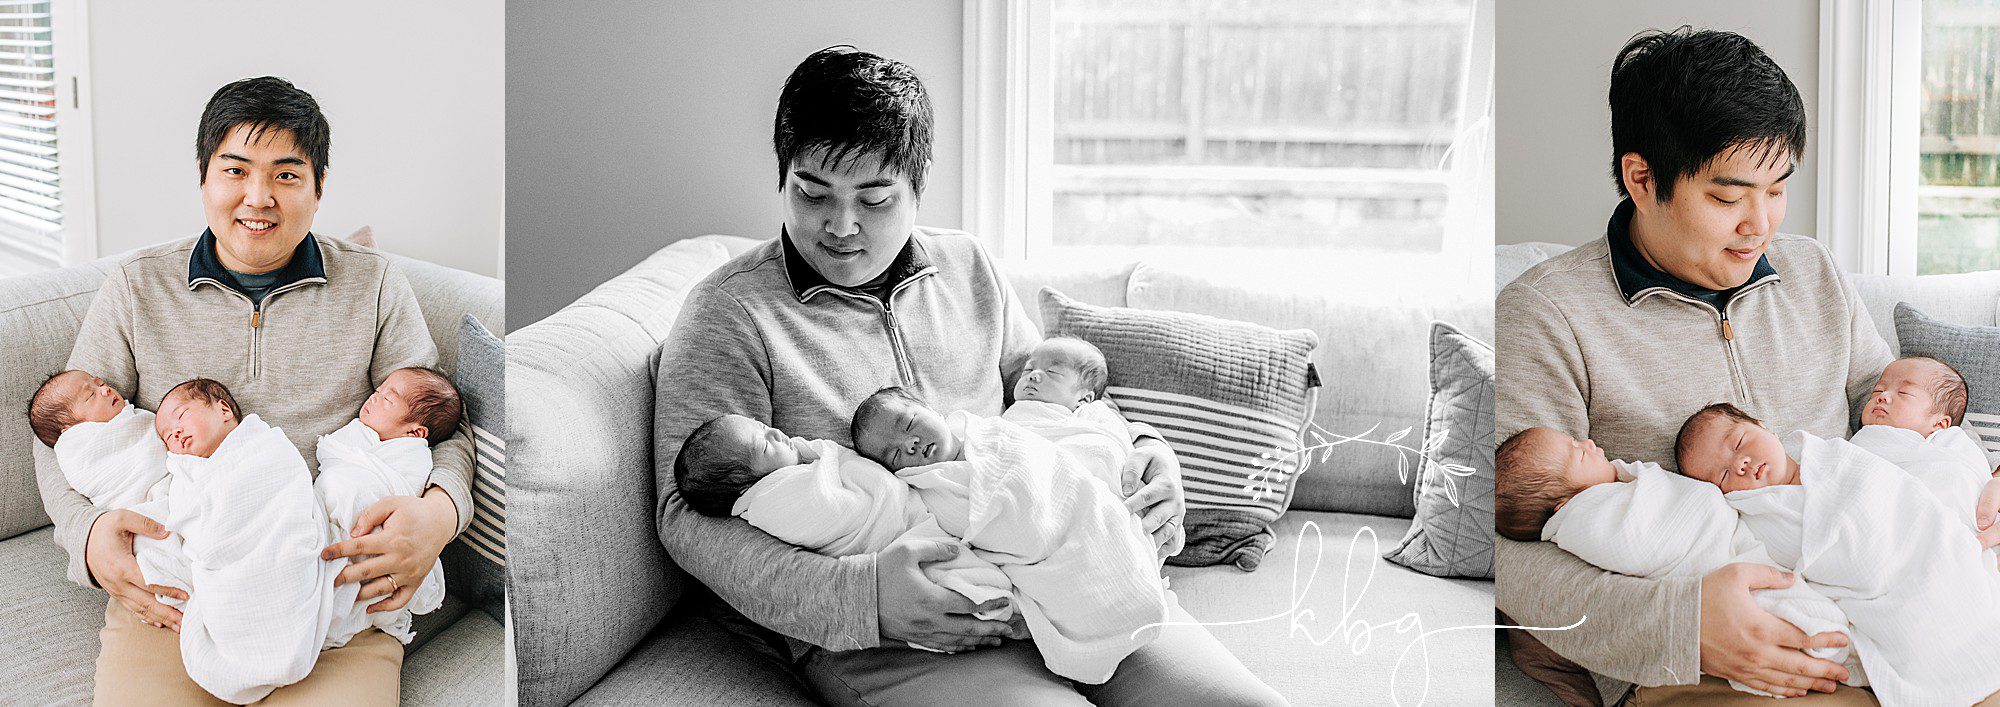 marietta newborn photographer - dad posing with his new triplet babies 